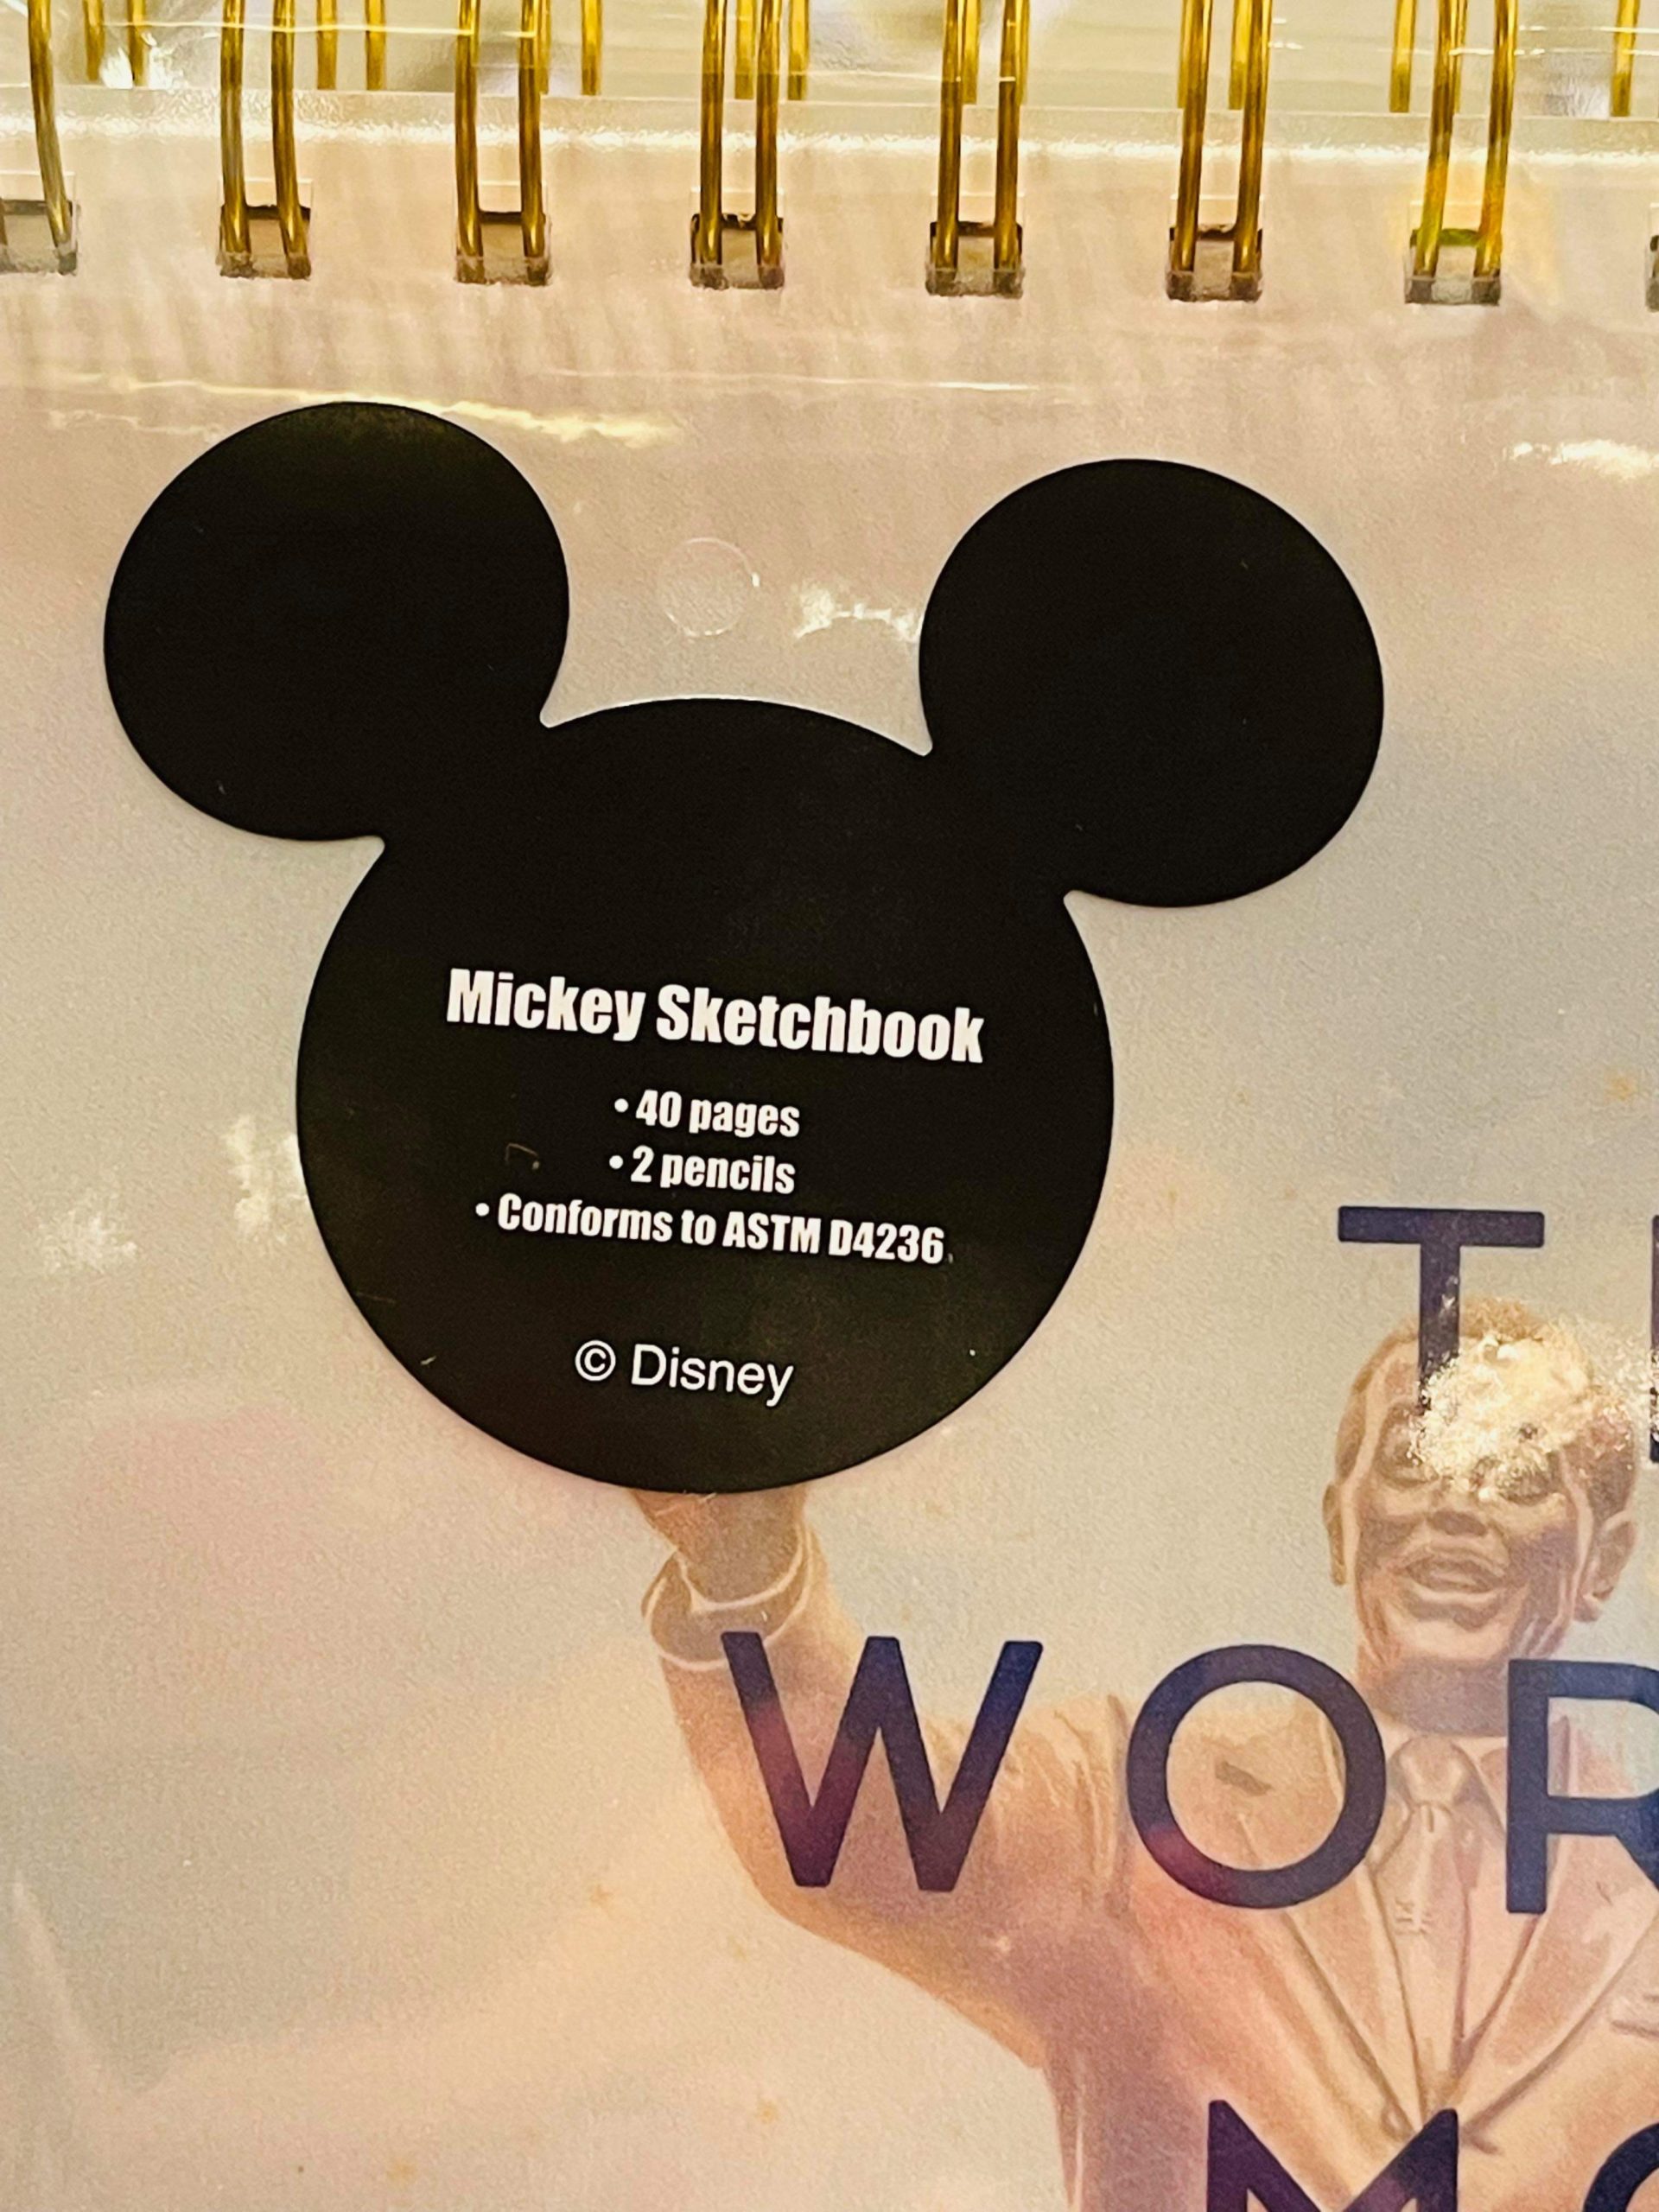 Walt Disney World 50th Anniversary Photo Album – Medium